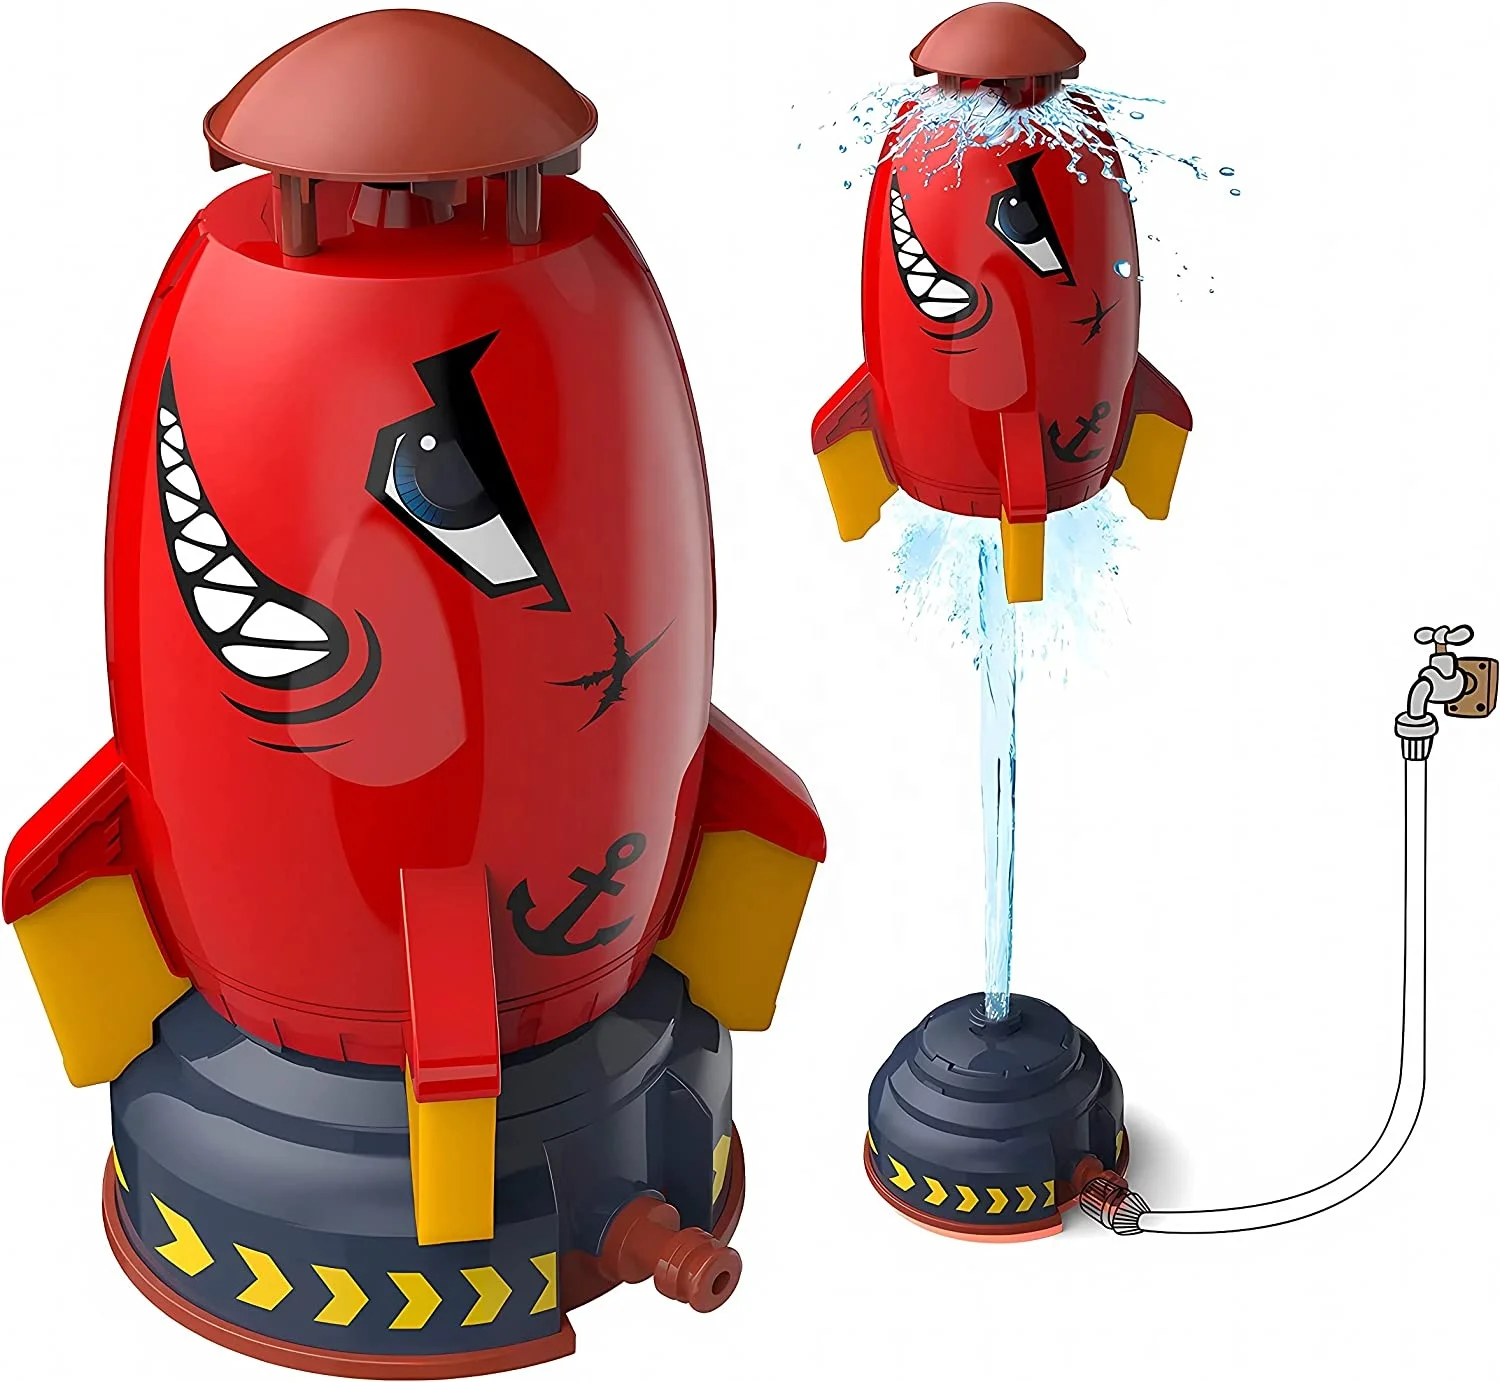 

Launch Rocket Outdoor Sprinkler Toy Water Rockets Launcher for Kids Outdoor Toys Water Sprinkler for Kids